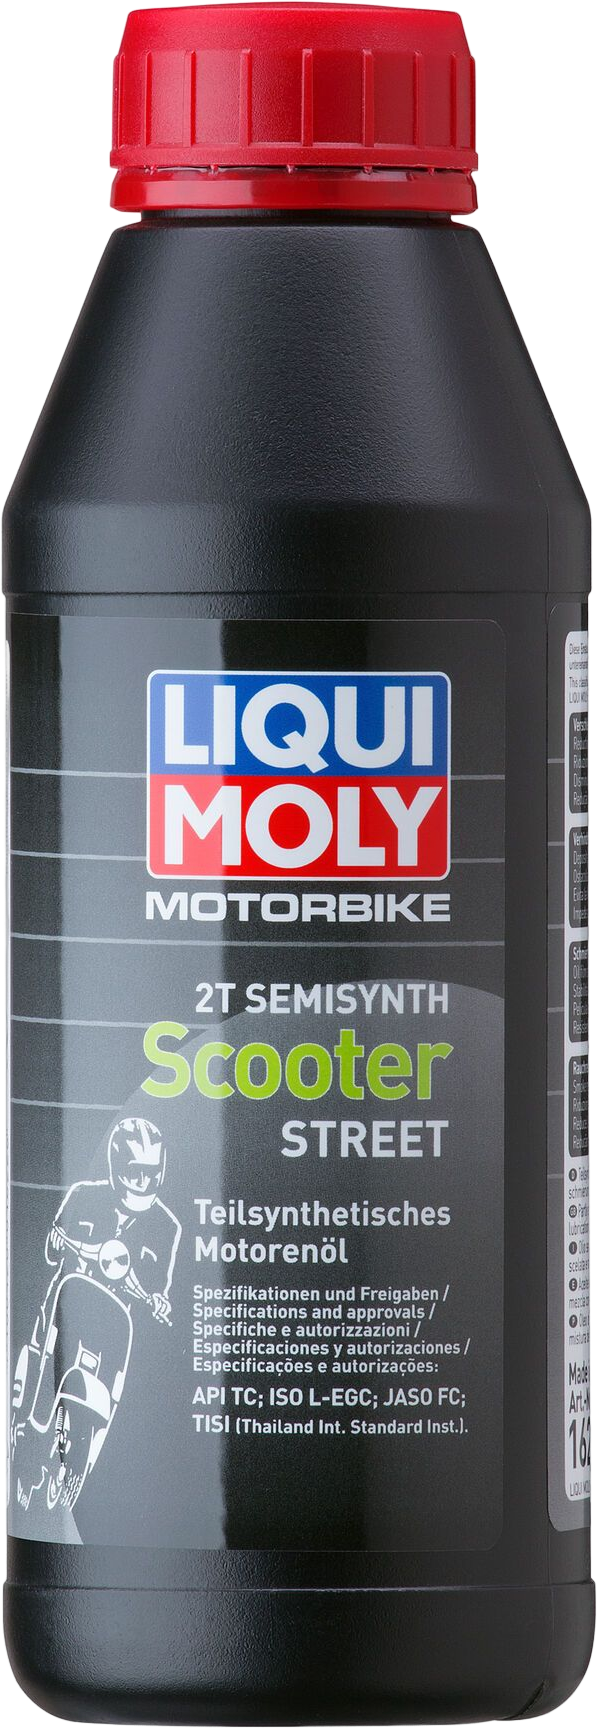 Liqui Moly Motorbike 2T Semisynth Scooter Street, 500 ml